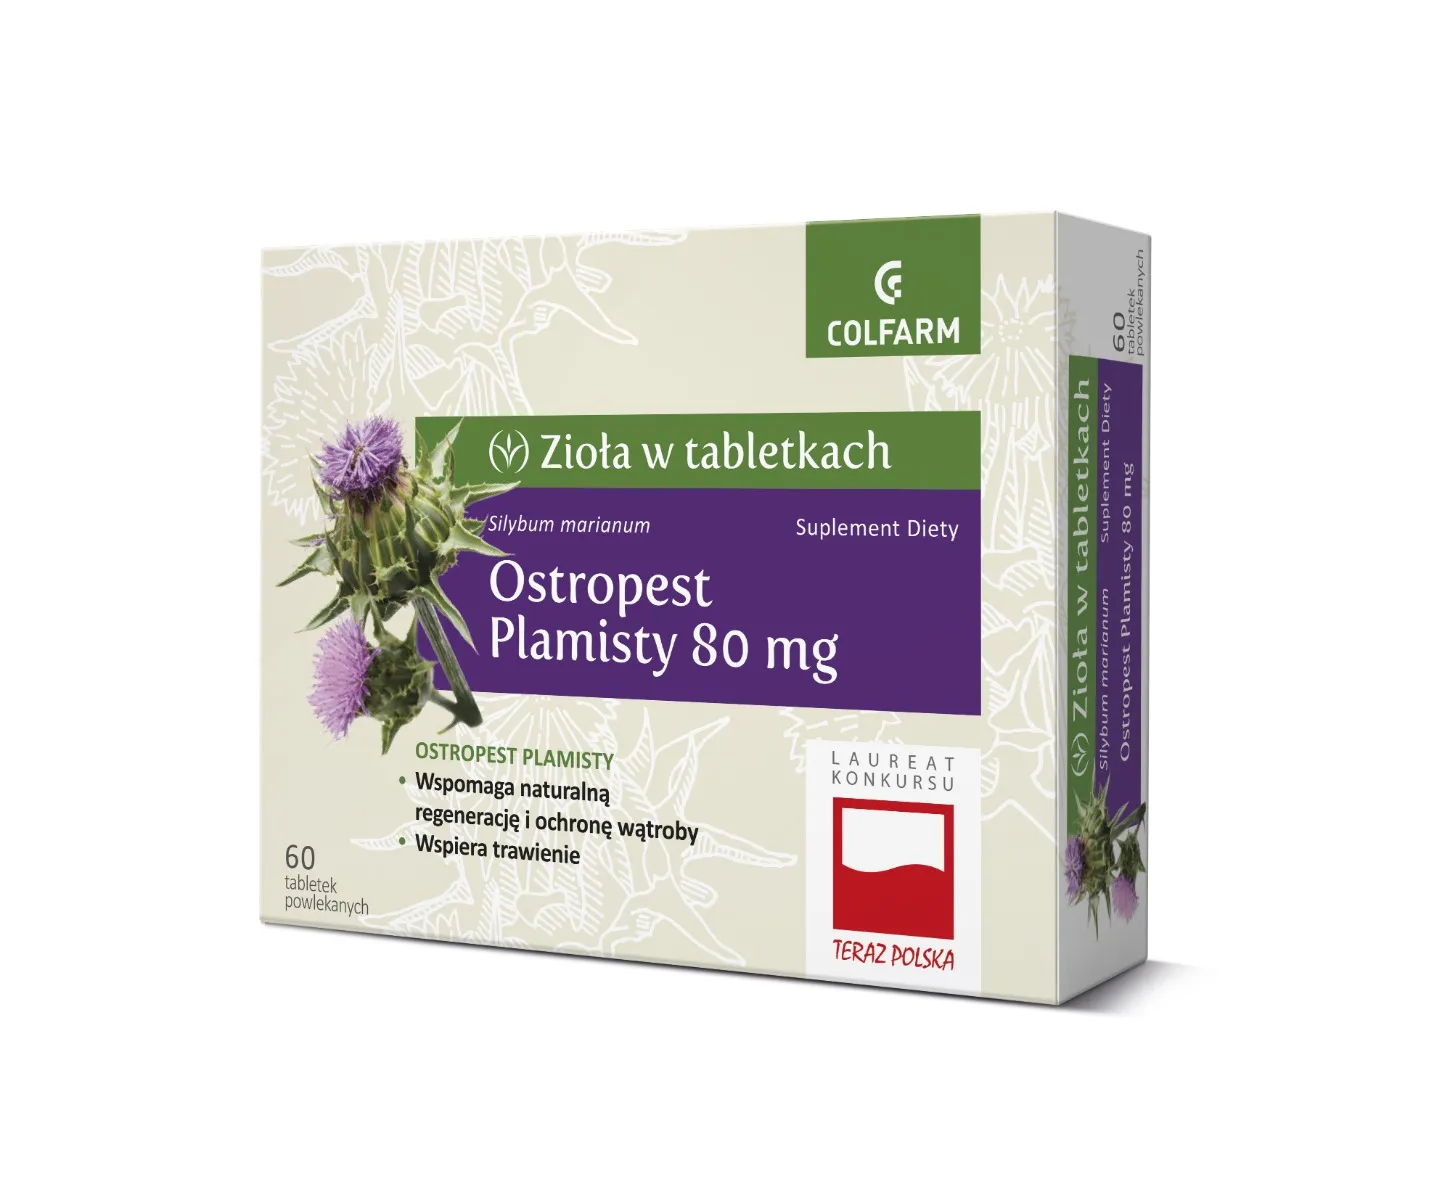 Ostropest Plamisty, suplement diety silybum marianum 80 mg, 60 tabletek powlekanych